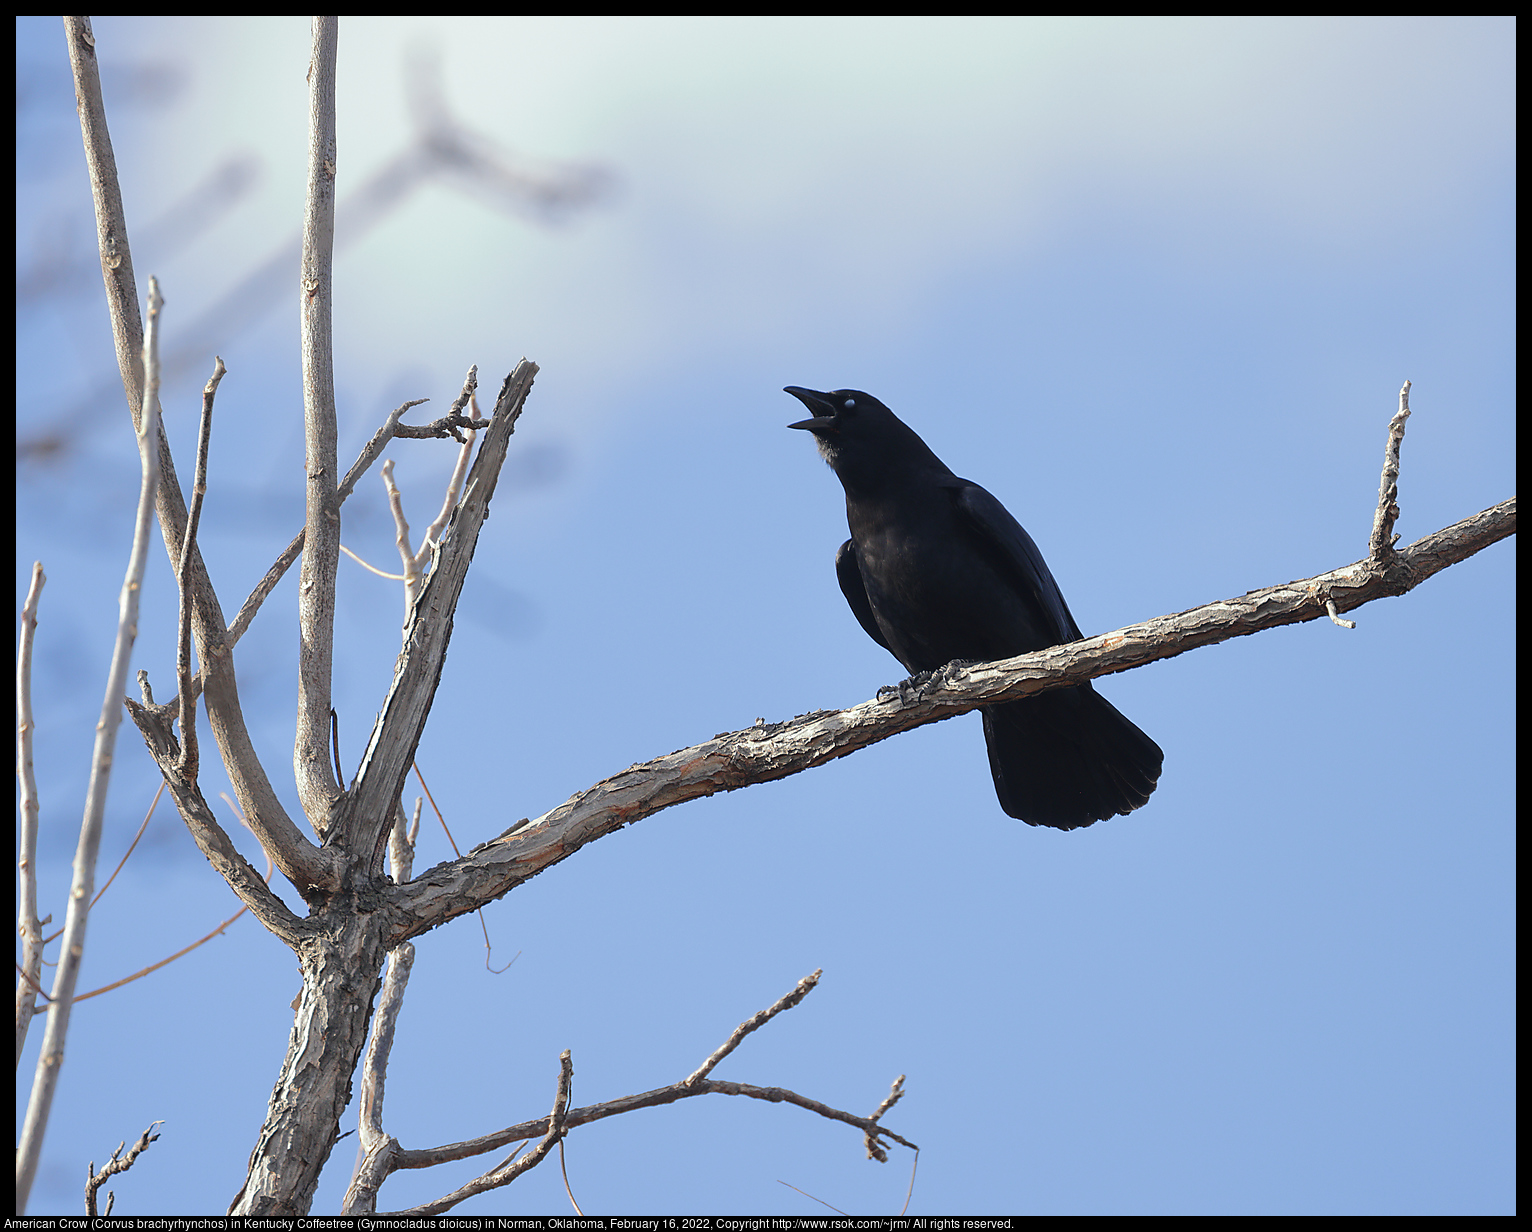 American Crow (Corvus brachyrhynchos) in Kentucky Coffeetree (Gymnocladus dioicus) in Norman, Oklahoma, February 16, 2022